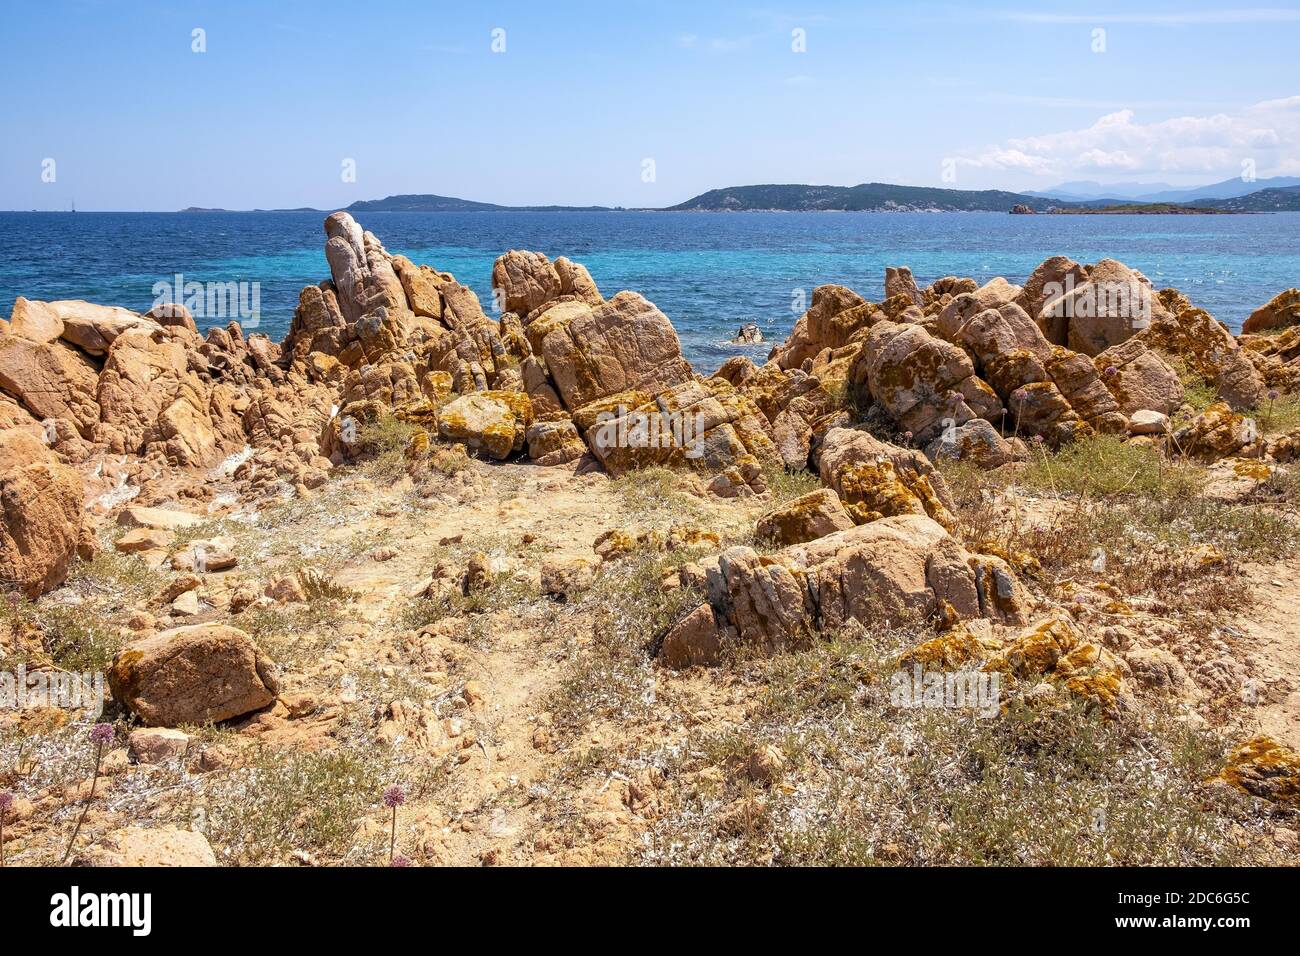 Panoramic view of Spalmatore di Terra peninsula of Marine Protected Area natural reserve with seashore rocks of Isola Tavolara island on Tyrrhenian Se Stock Photo